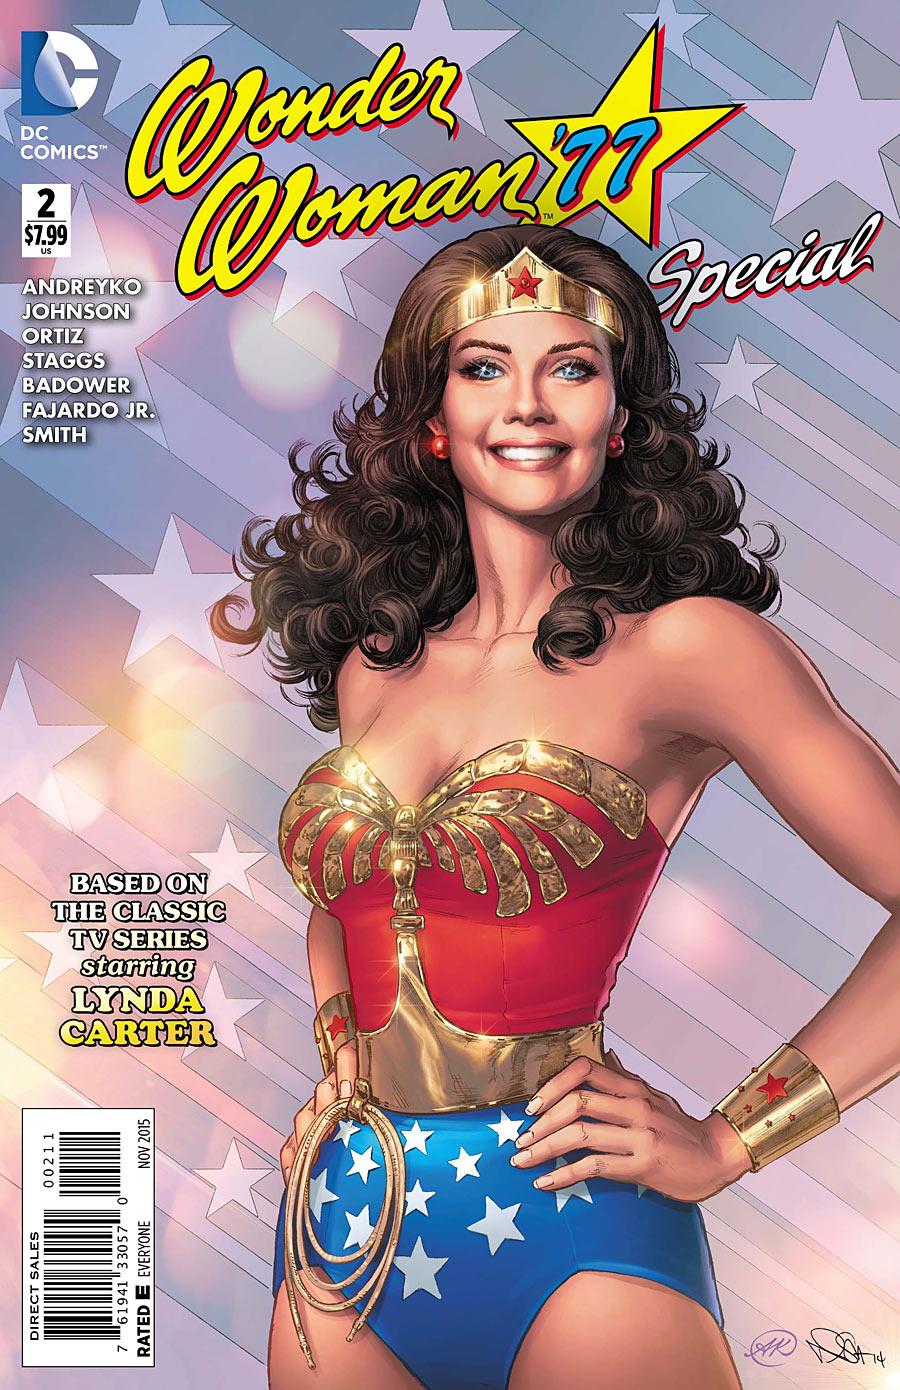 Wonder Woman '77 Special Vol. 1 #2